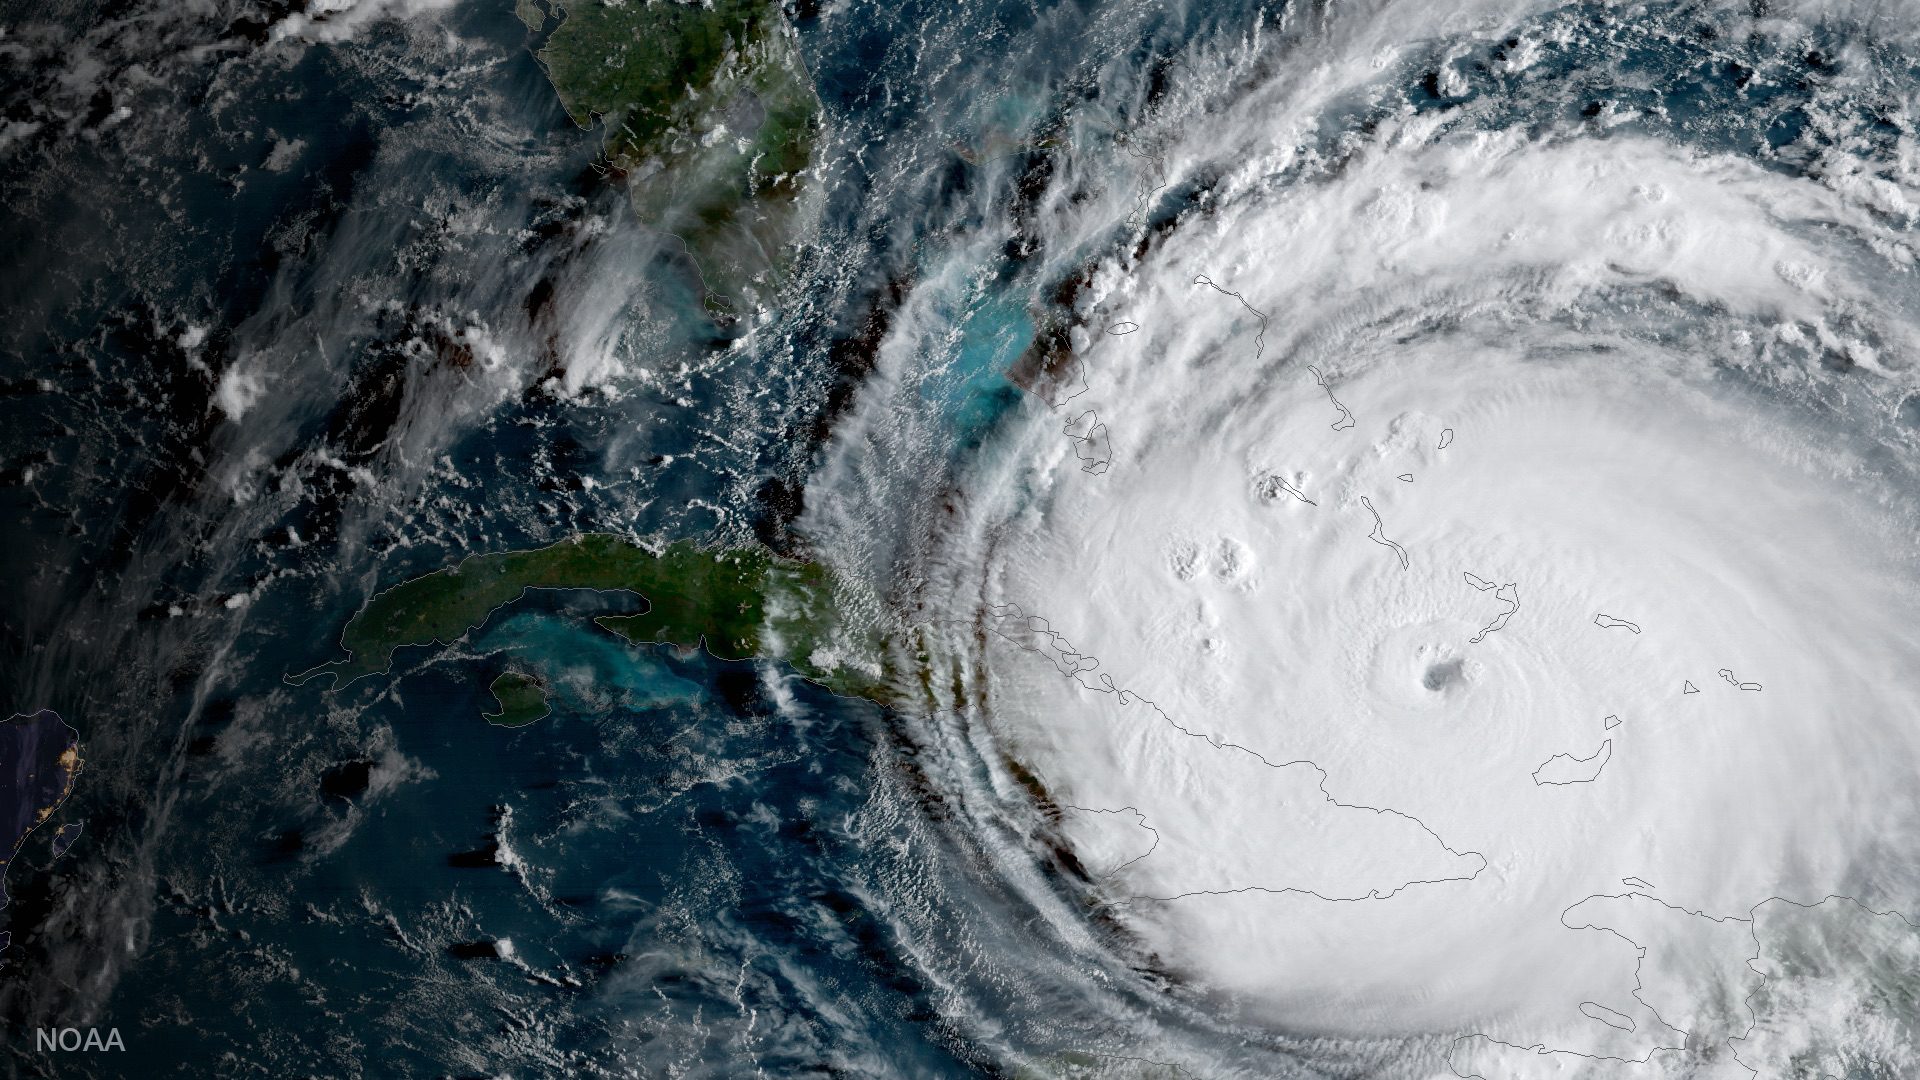 NOAA Predicts Near- to Above-Normal Atlantic Hurricane Season in 2018